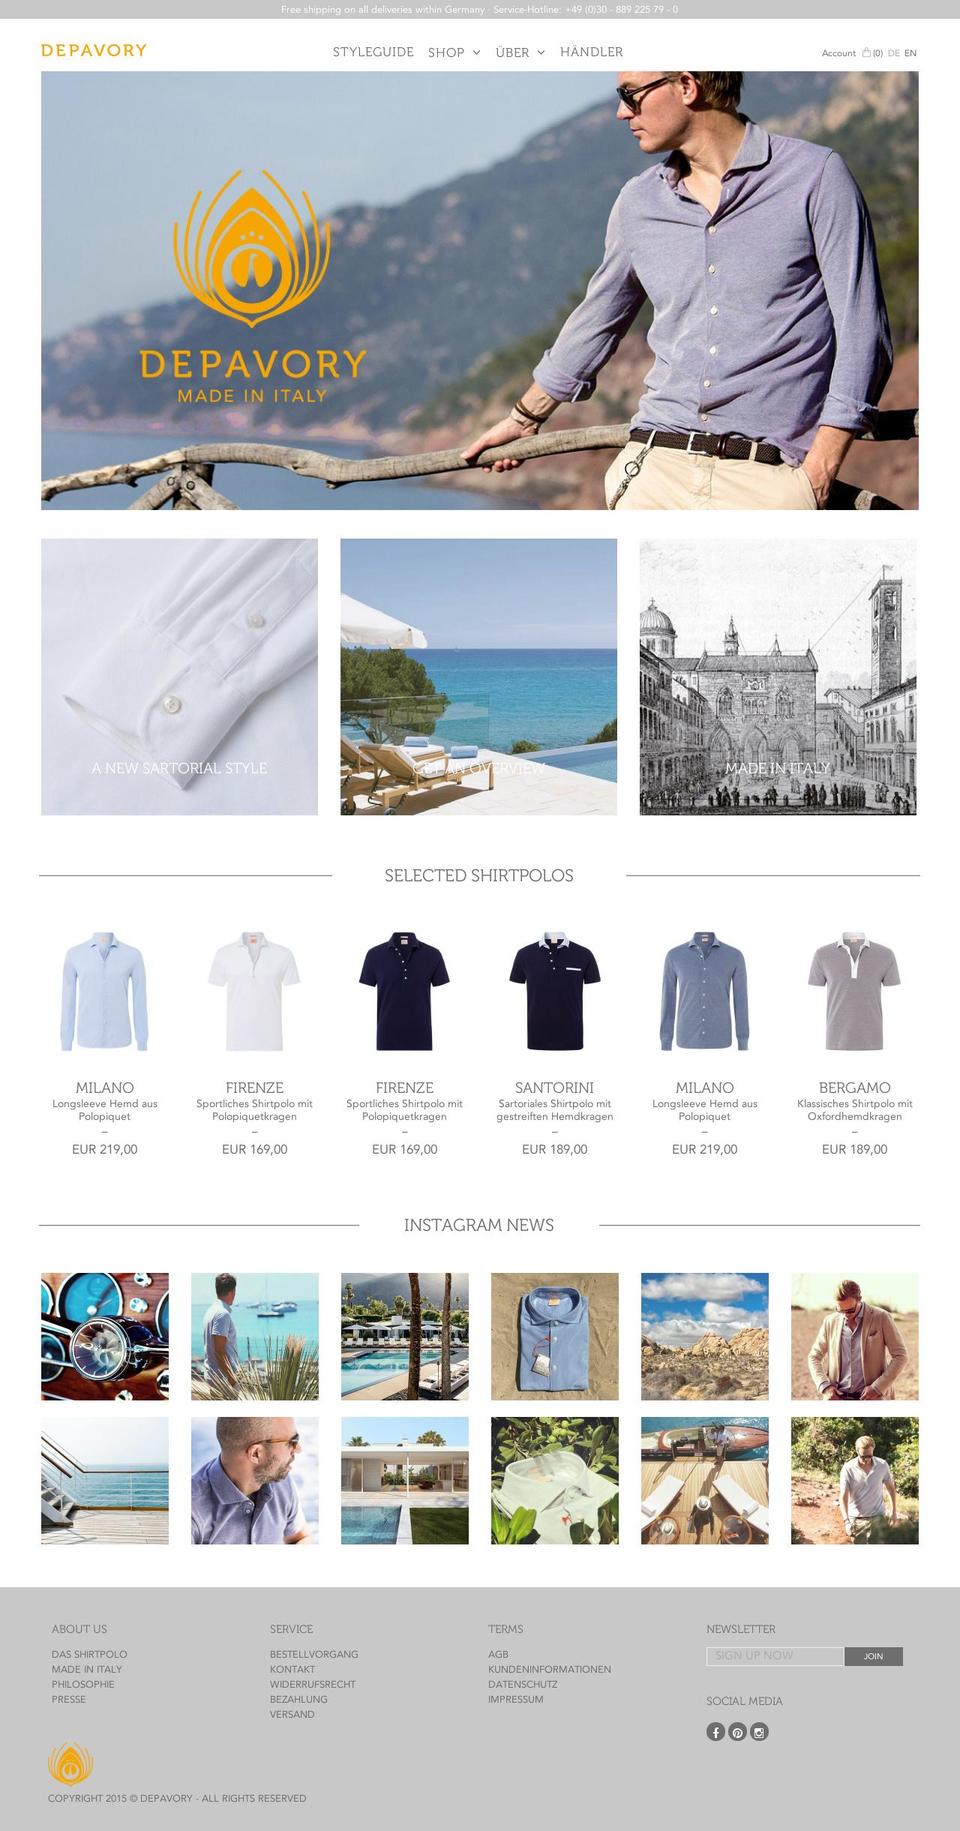 Depavory (2016-05-13) Shopify theme site example shirtpolocompany.com